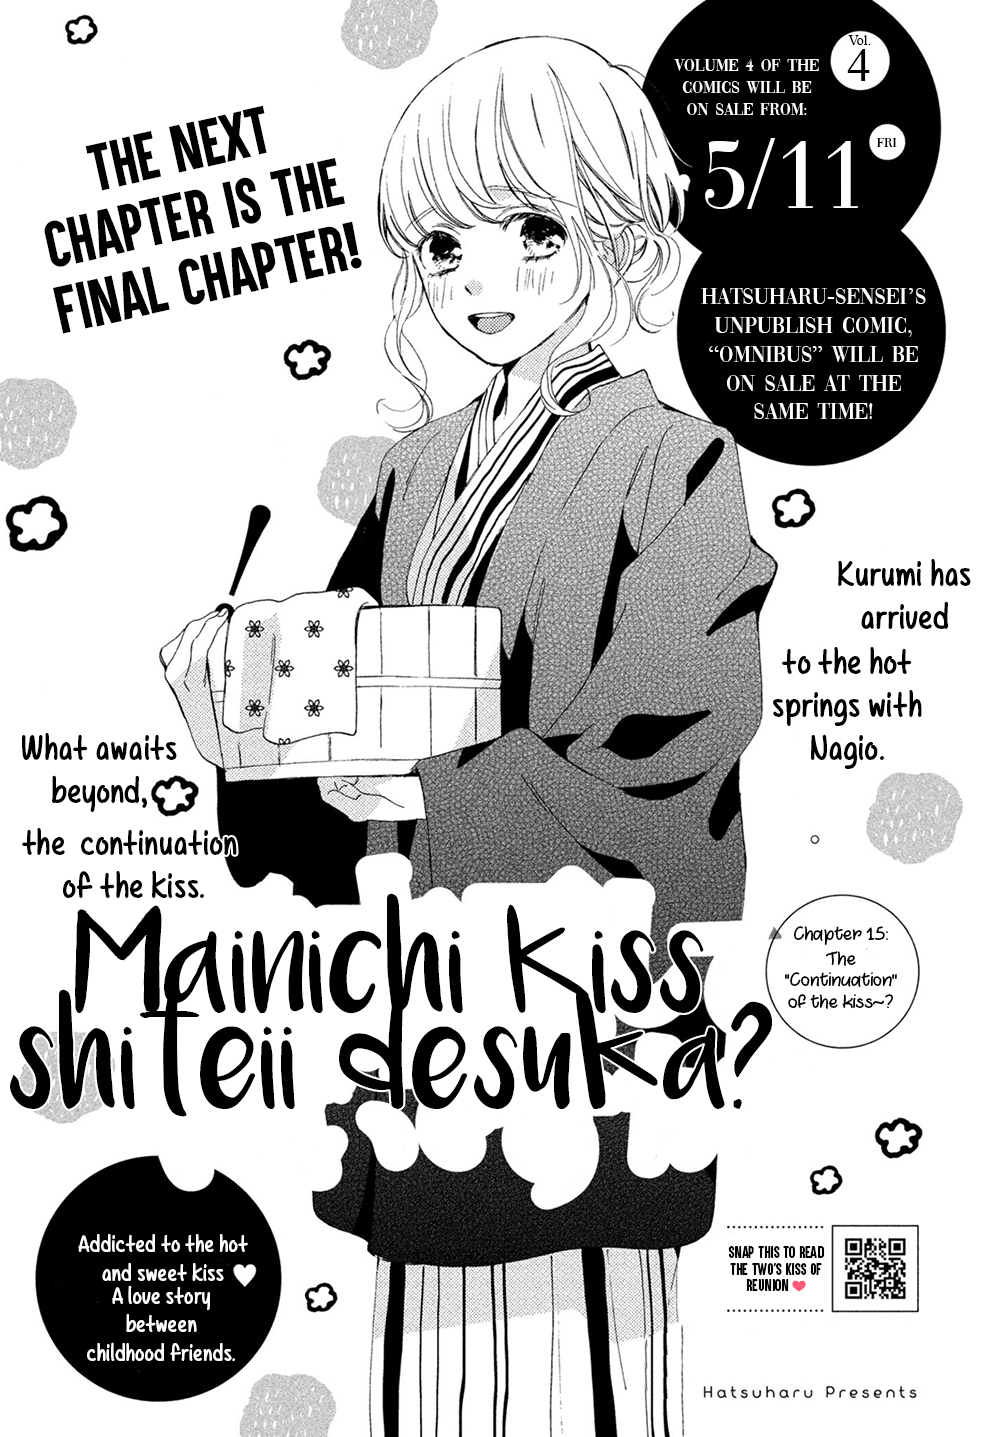 Mainichi Kiss shite ii desu ka? Vol. 4 Ch. 15 The "Continuation" of the Kiss~?